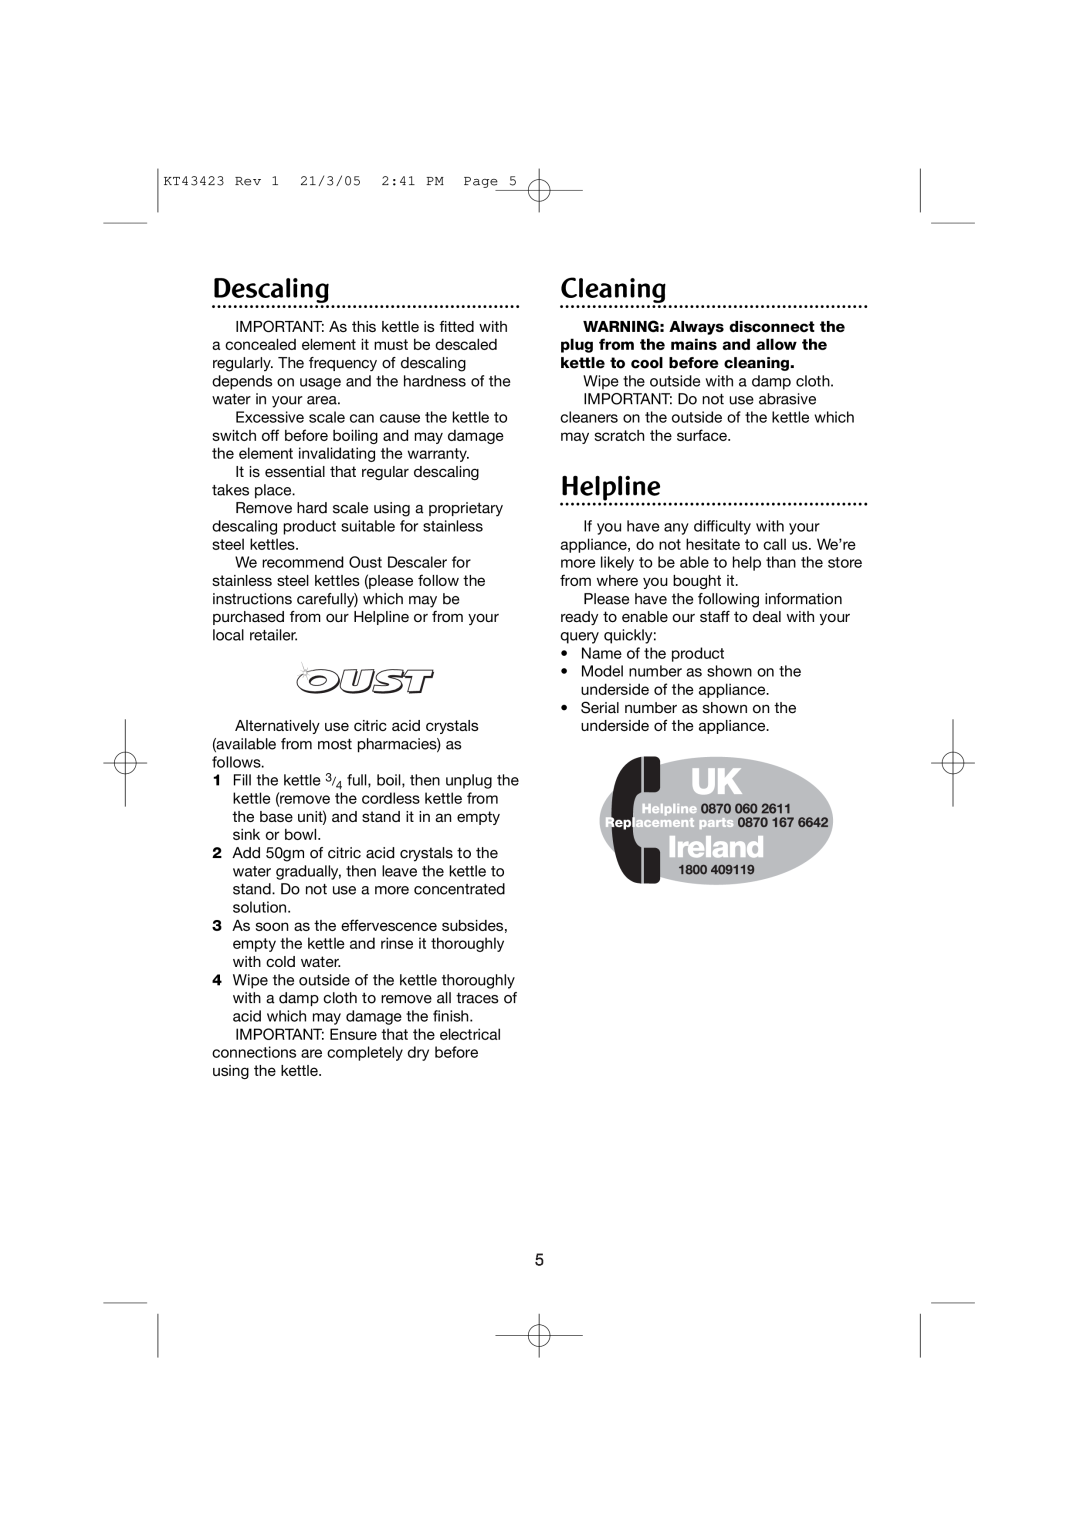 Morphy Richards Kettle manual Descaling, Cleaning, Helpline 